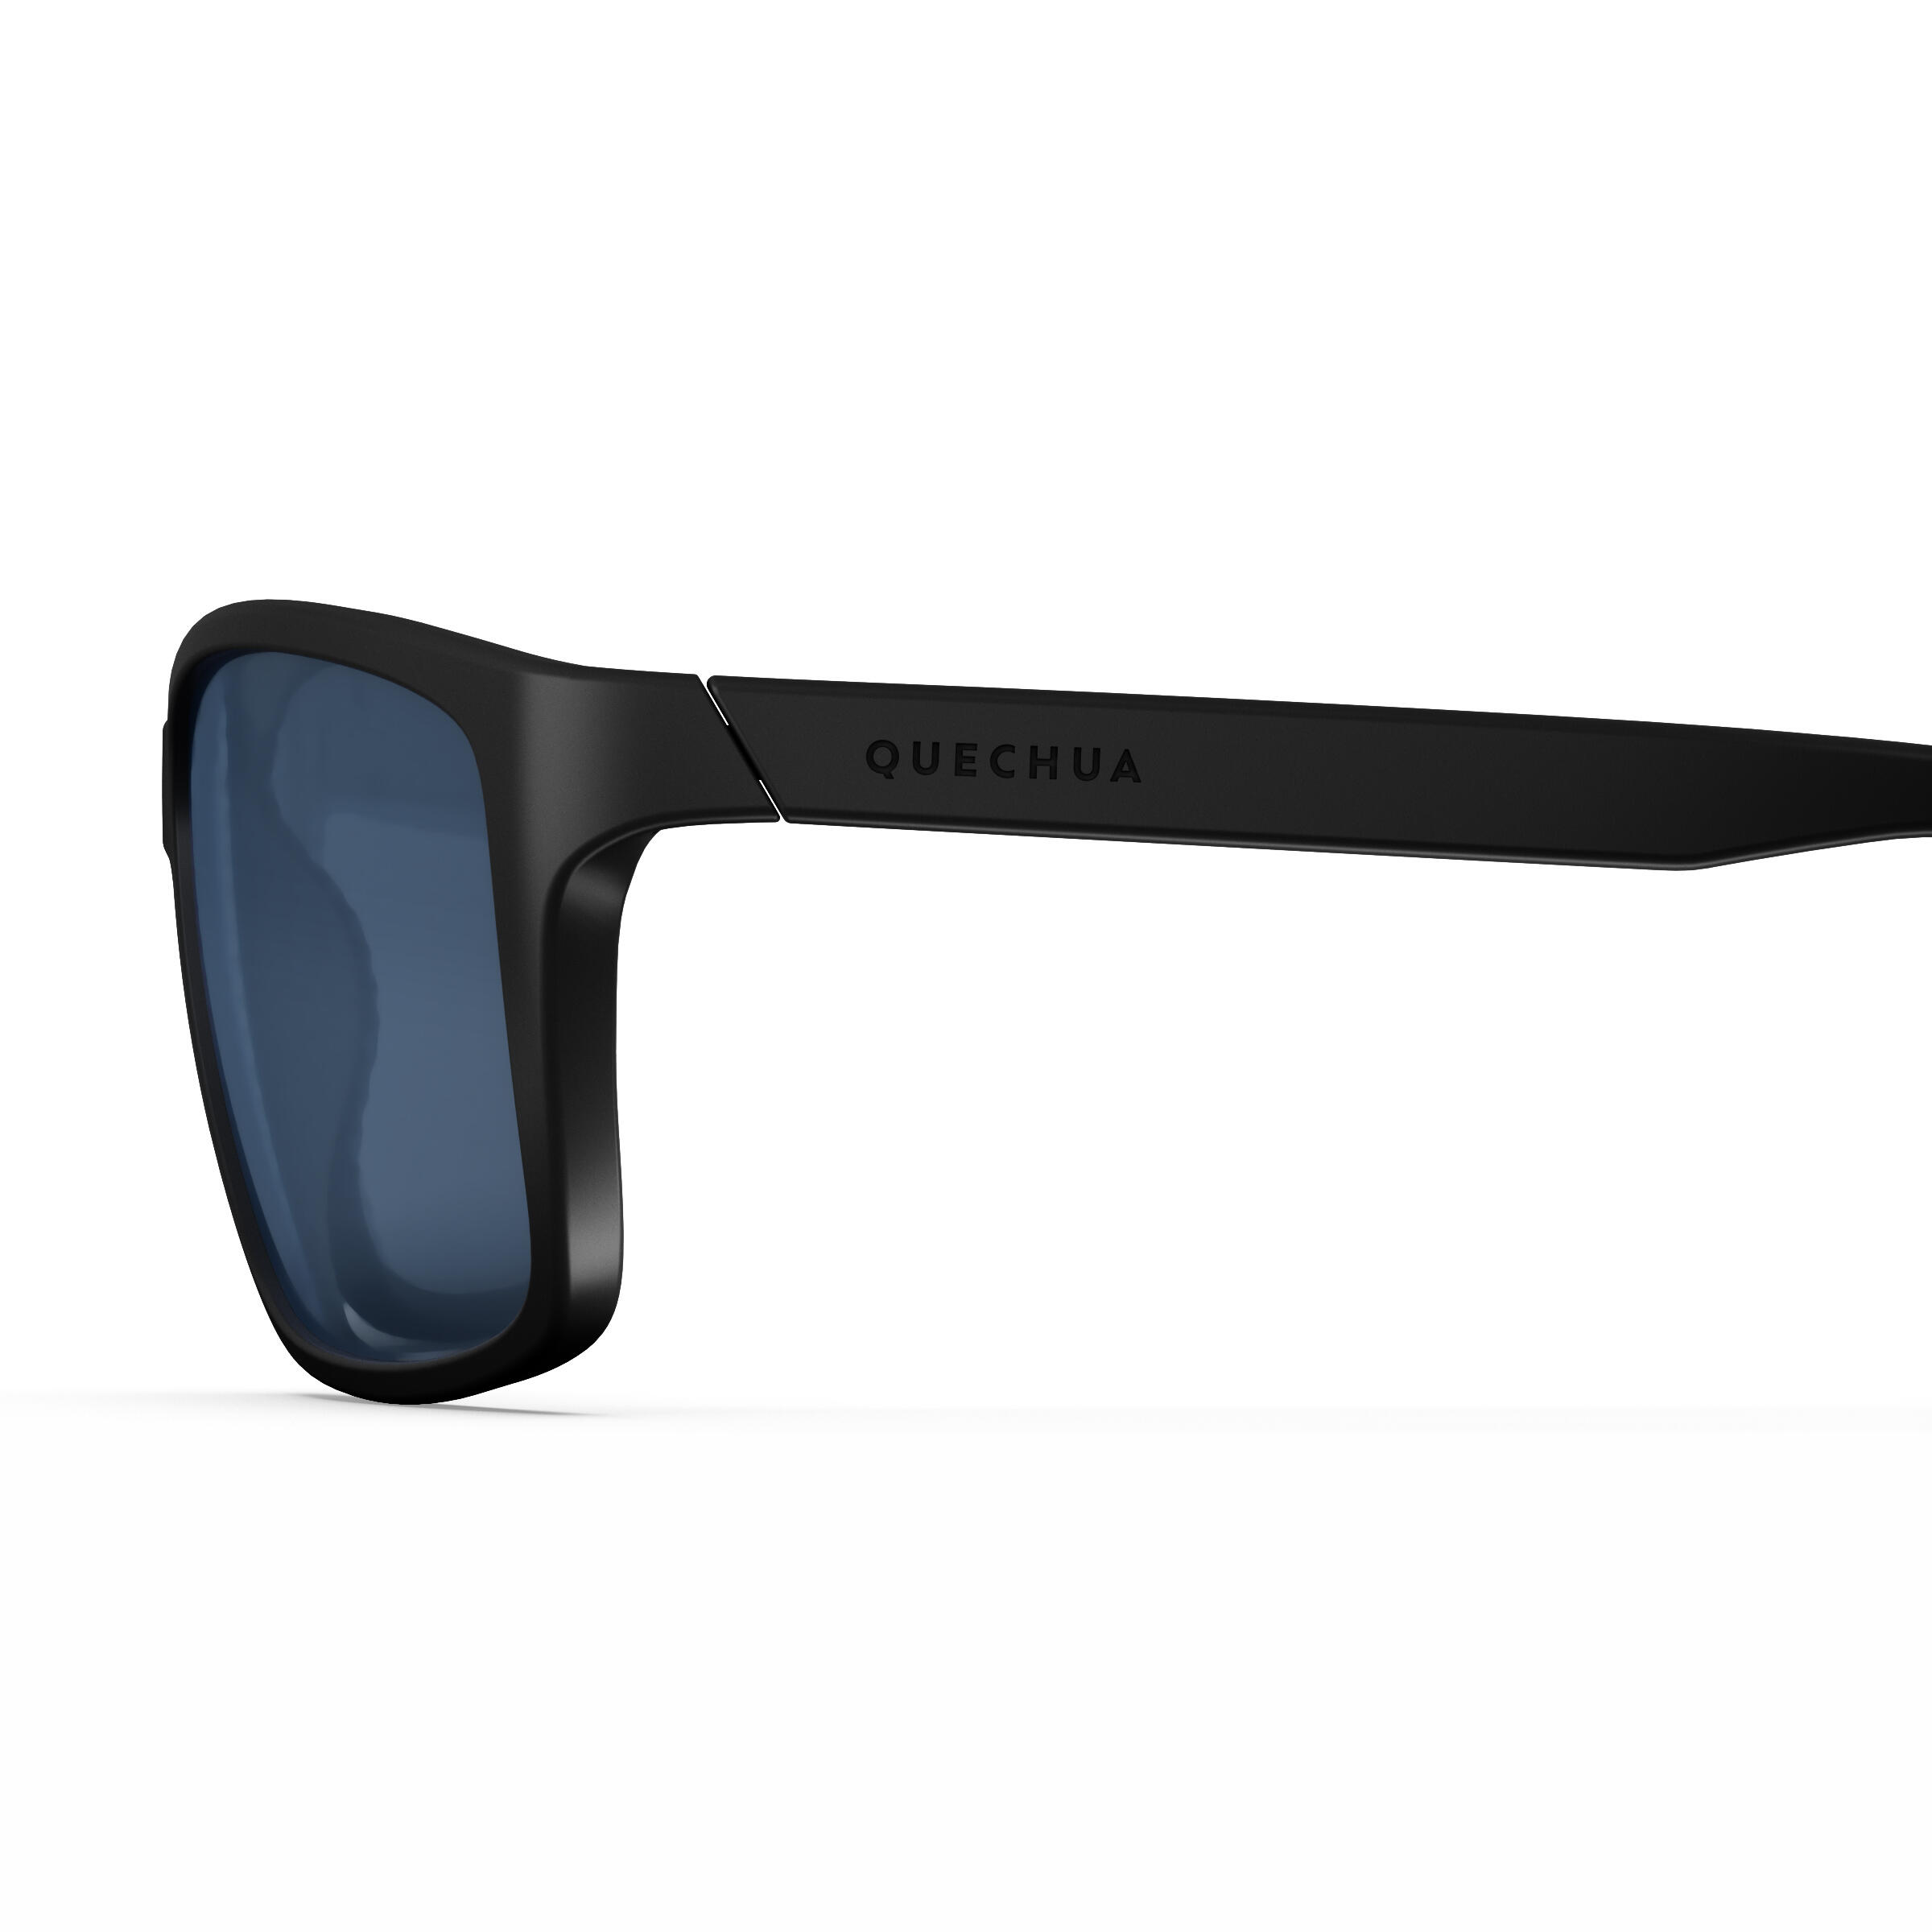 Decathlon Tribord 500 Polarised Sunglasses review - Yachting World